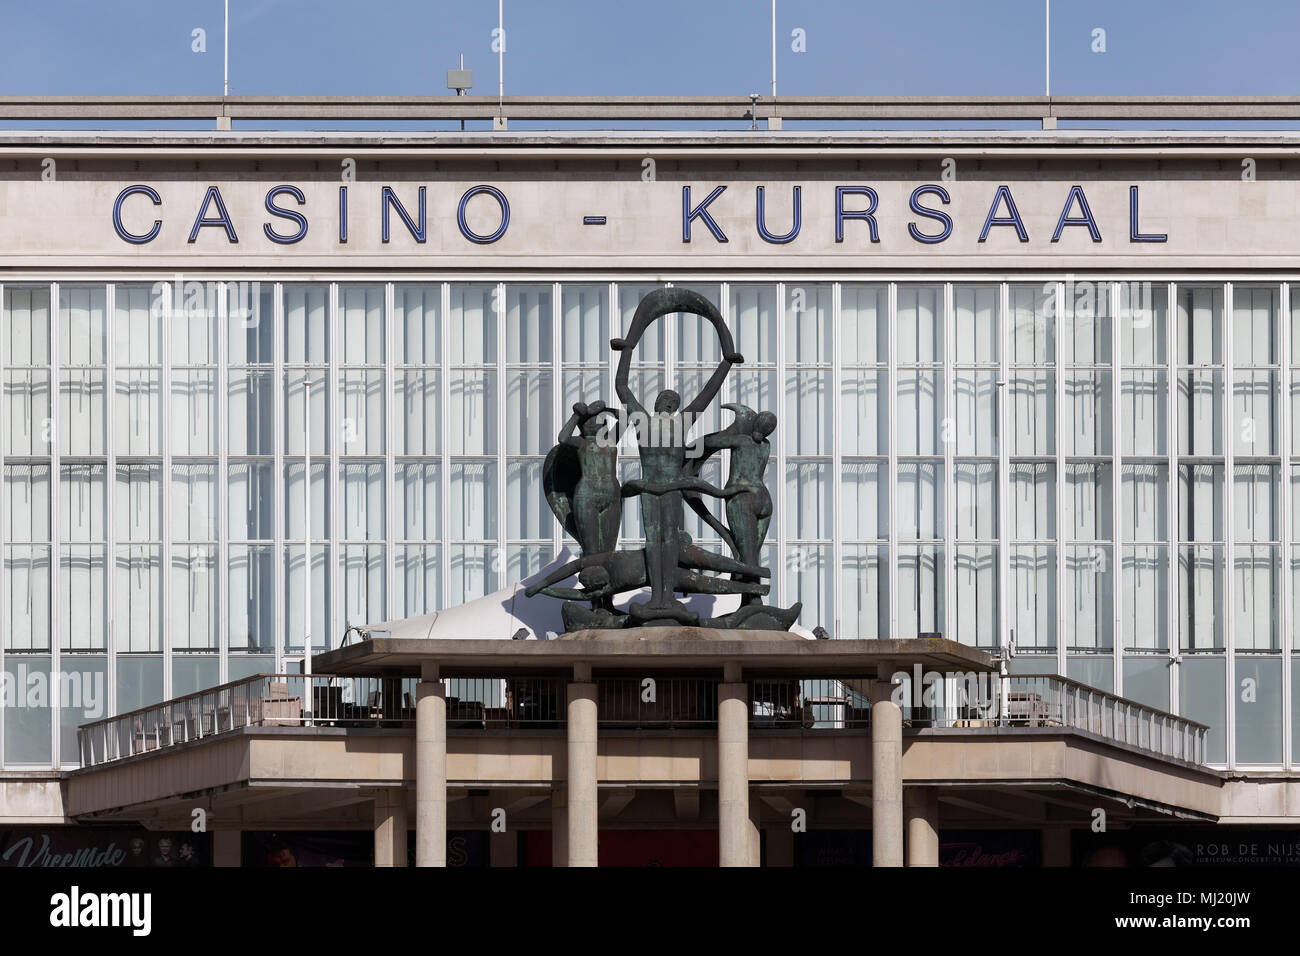 Casino-Kursaal d'Ostende, station balnéaire, côte belge, Flandre occidentale, Belgique Banque D'Images